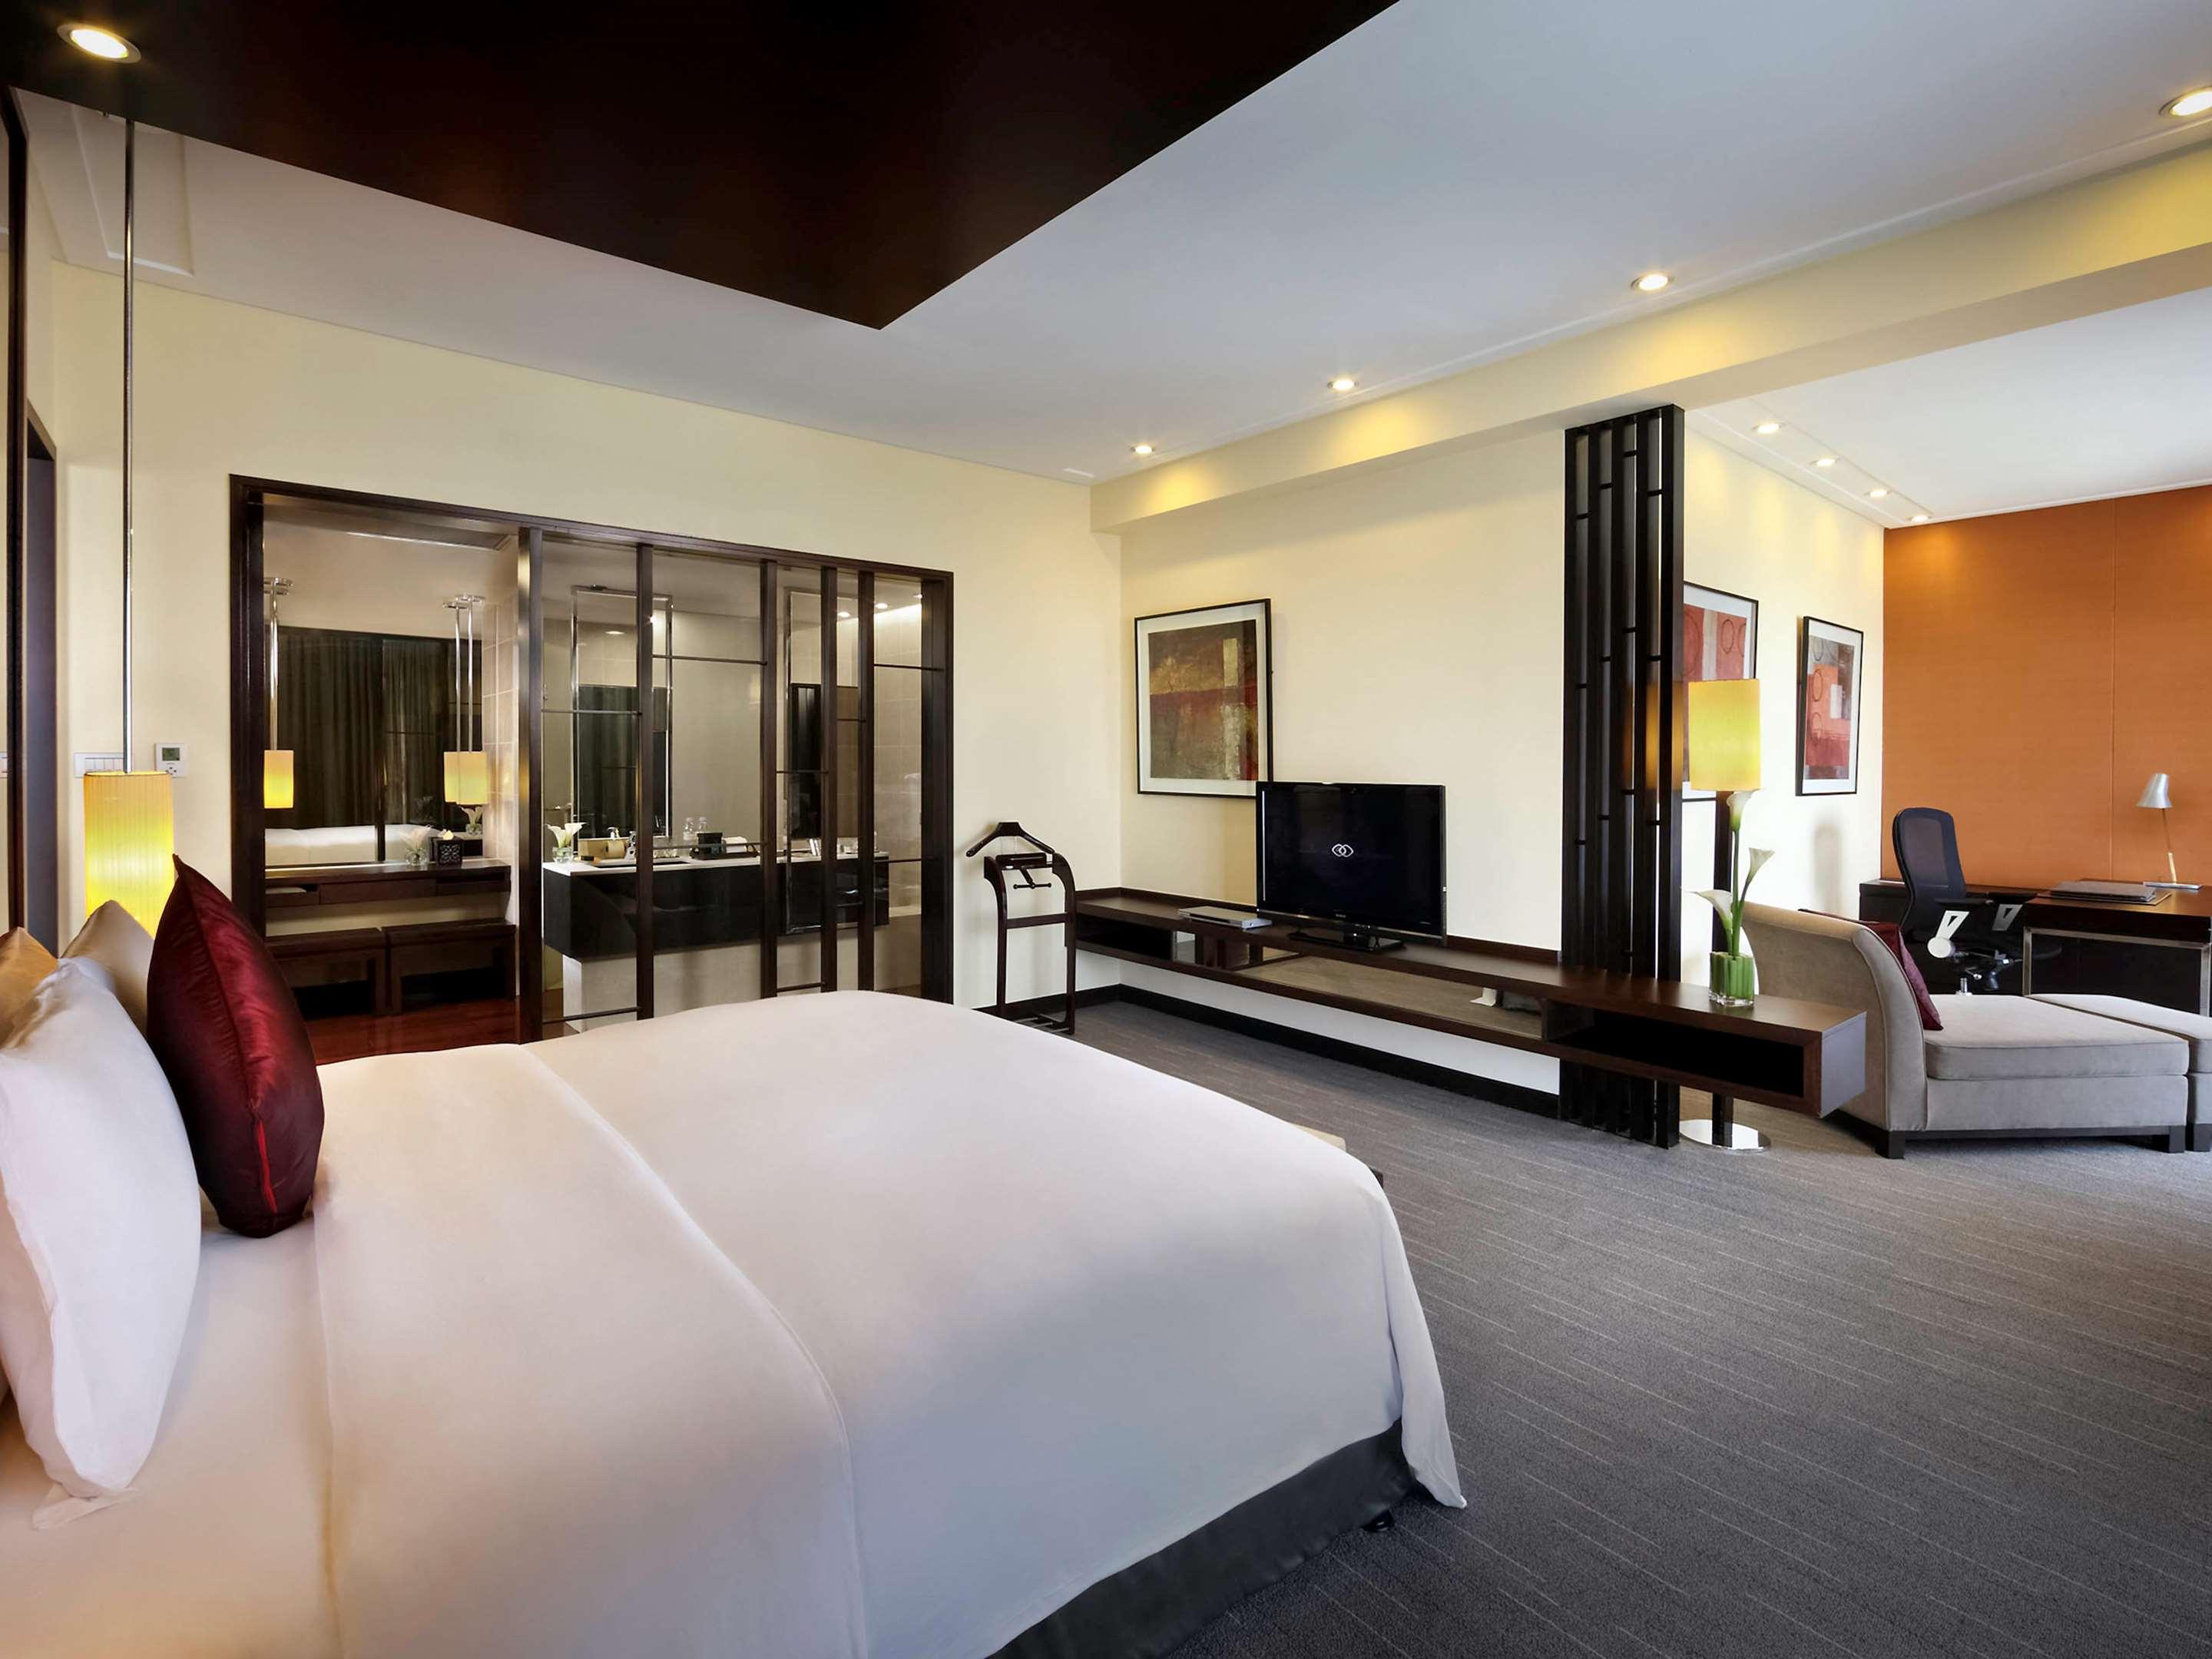 UCCP SHALOM HOTEL (Manila) - Specialty Inn Reviews & Photos - Tripadvisor